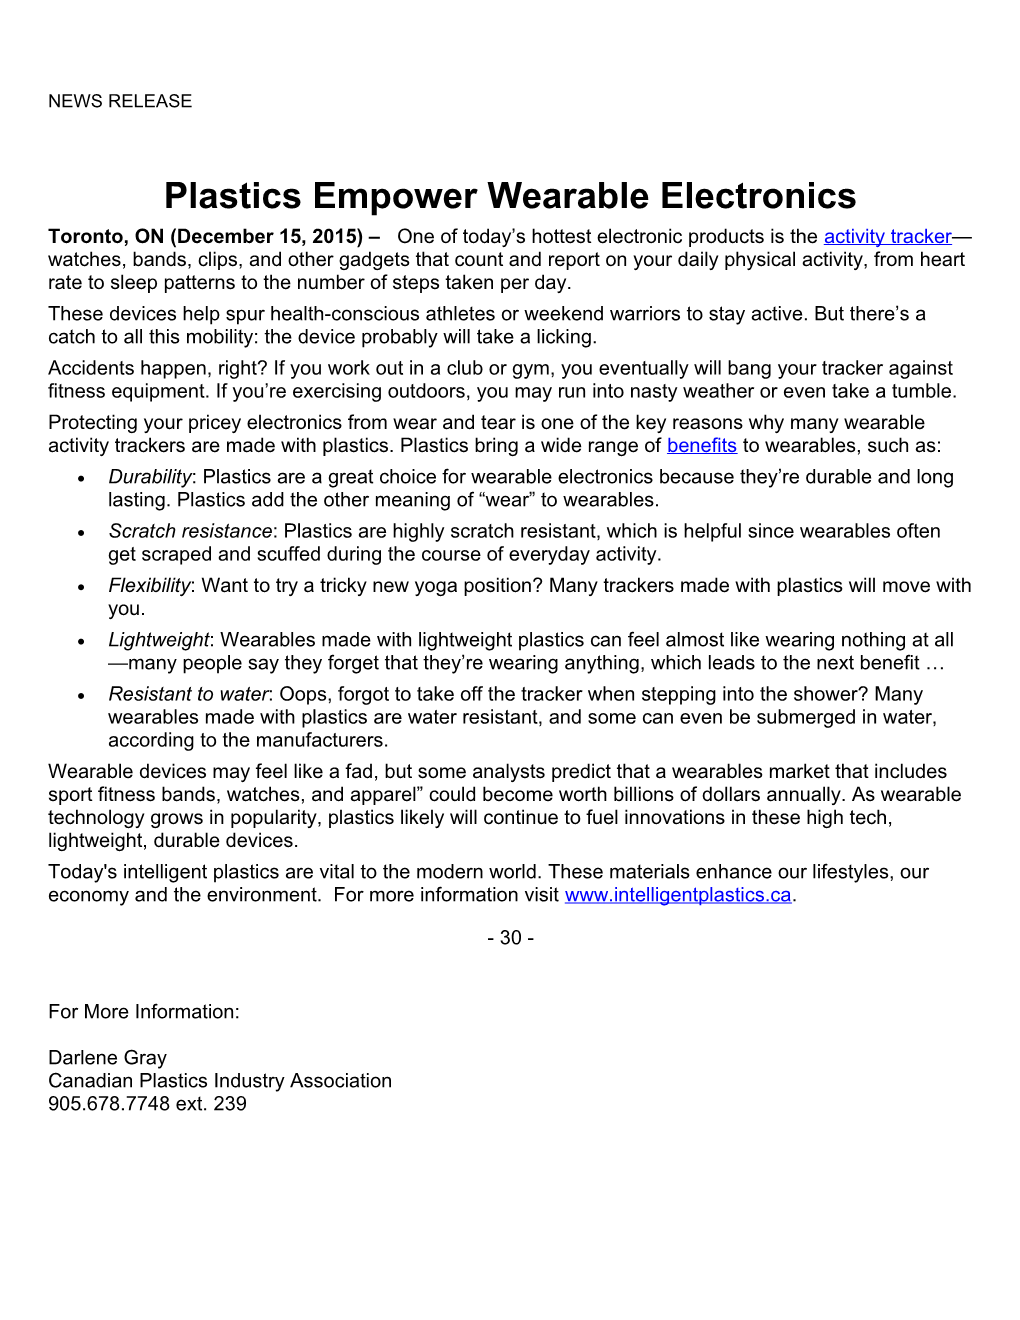 Plastics Empower Wearable Electronics